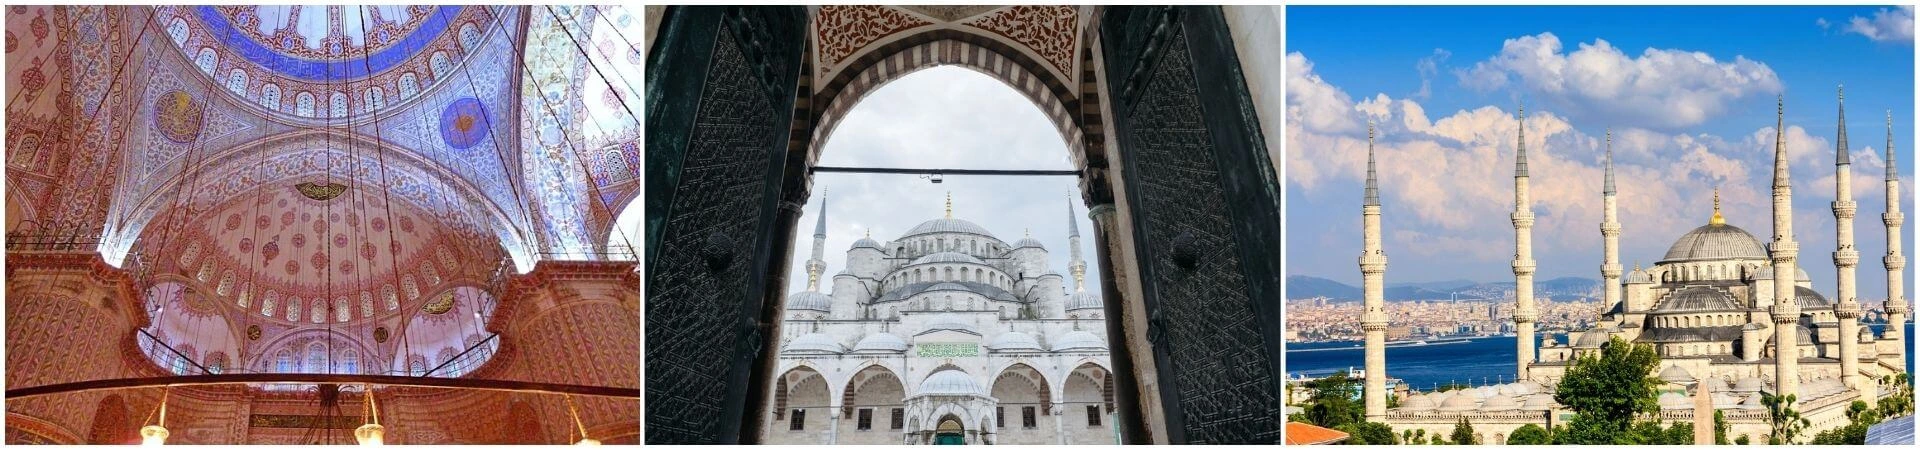 Visita guiada à Mesquita Azul em Istambul